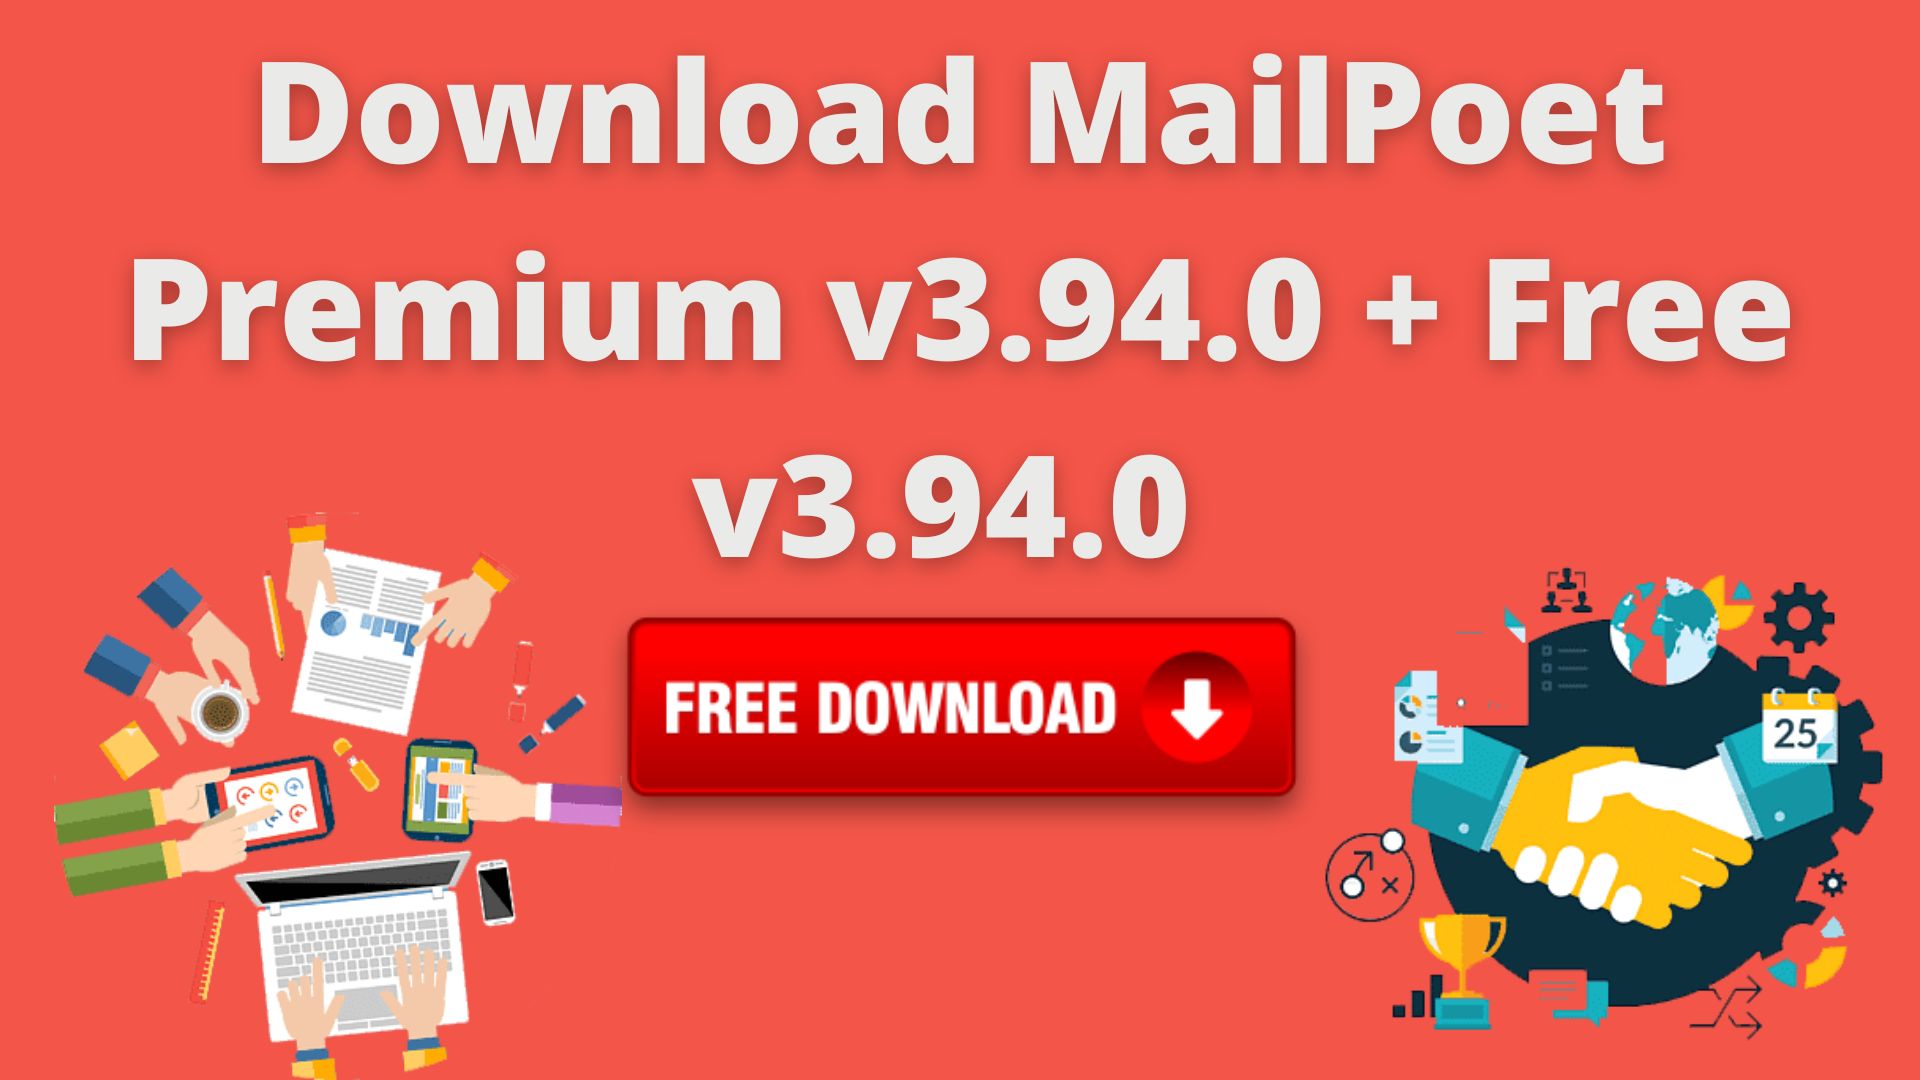 Download Mailpoet Premium V3.94.0 + Free V3.94.0